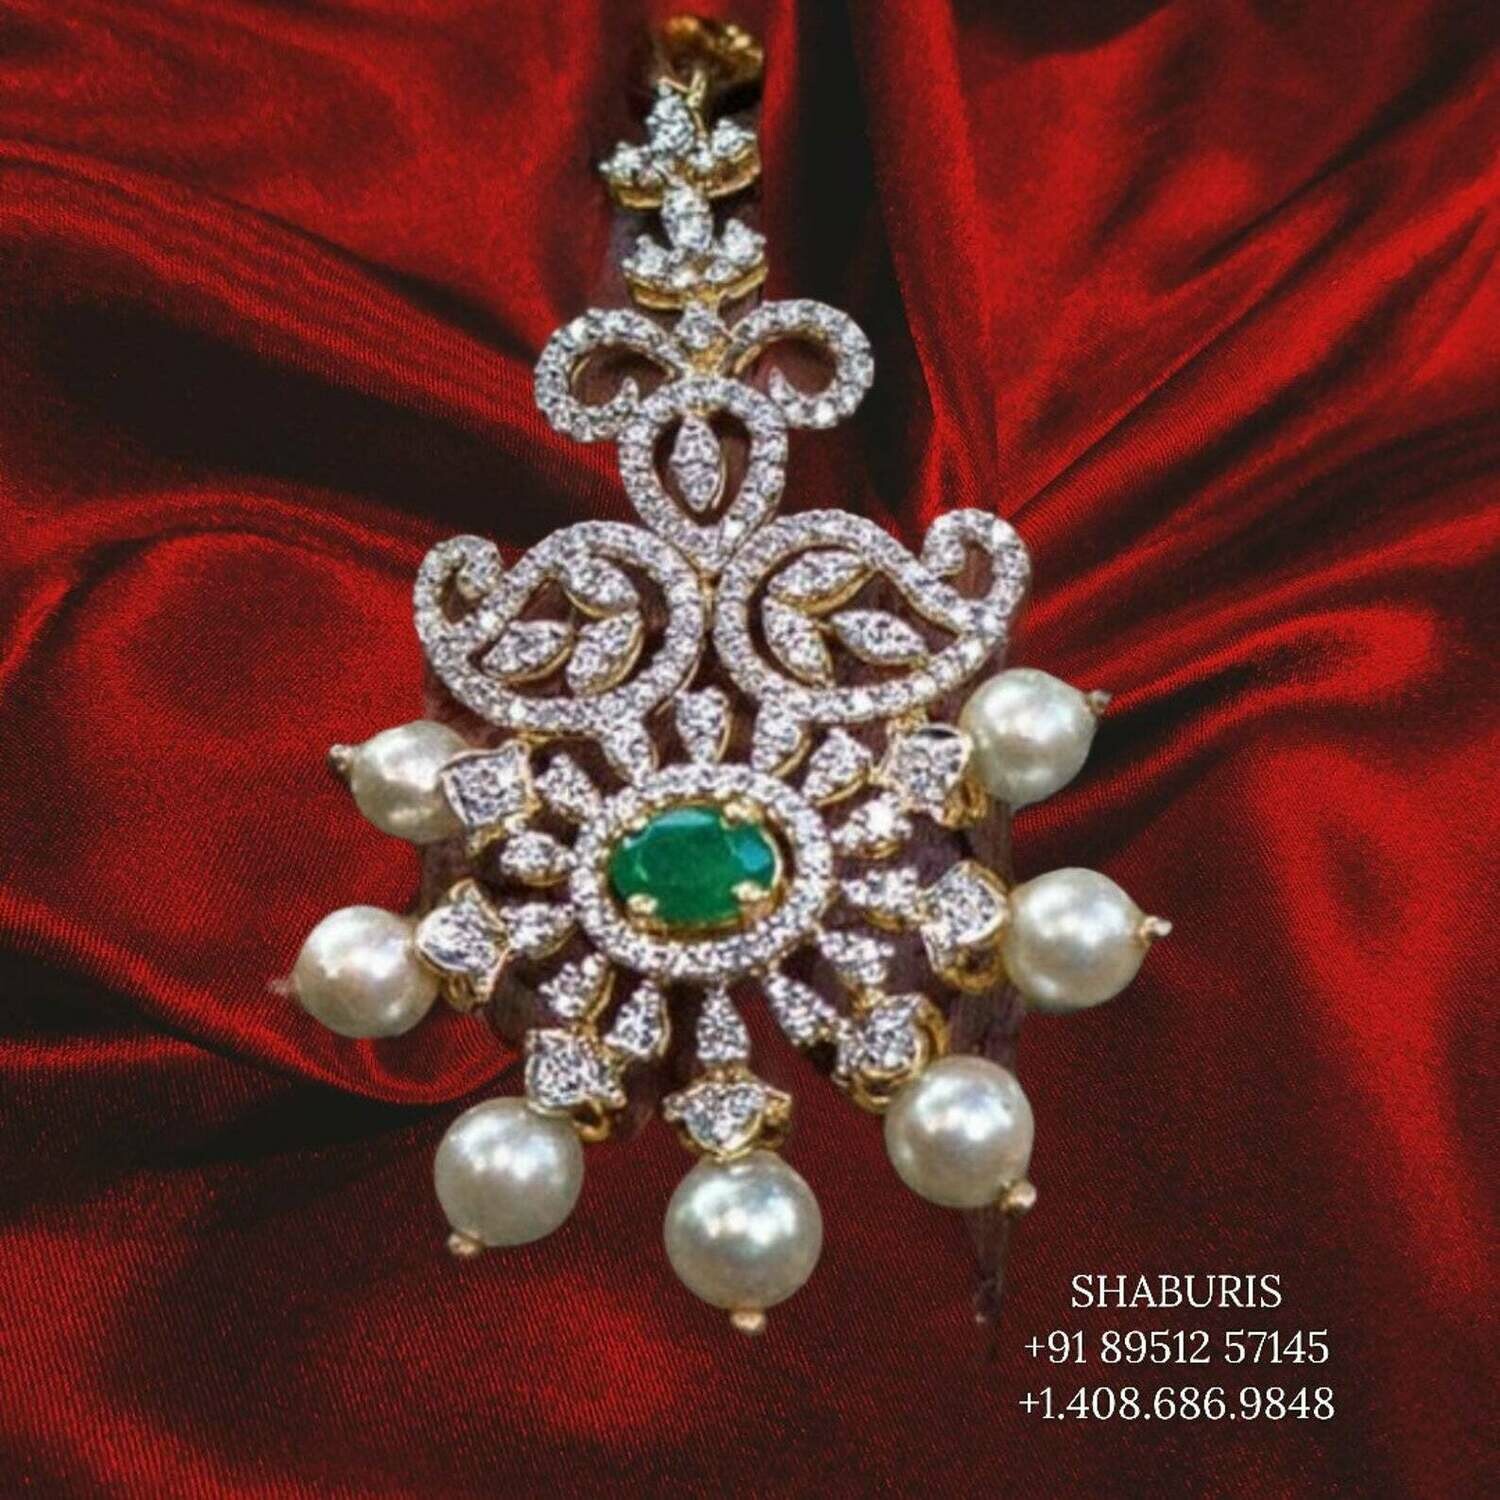 Jewelry set diamond pendant emerald pure silver jewelry indian gifting statement jewelry simple jewelry -SHABURIS